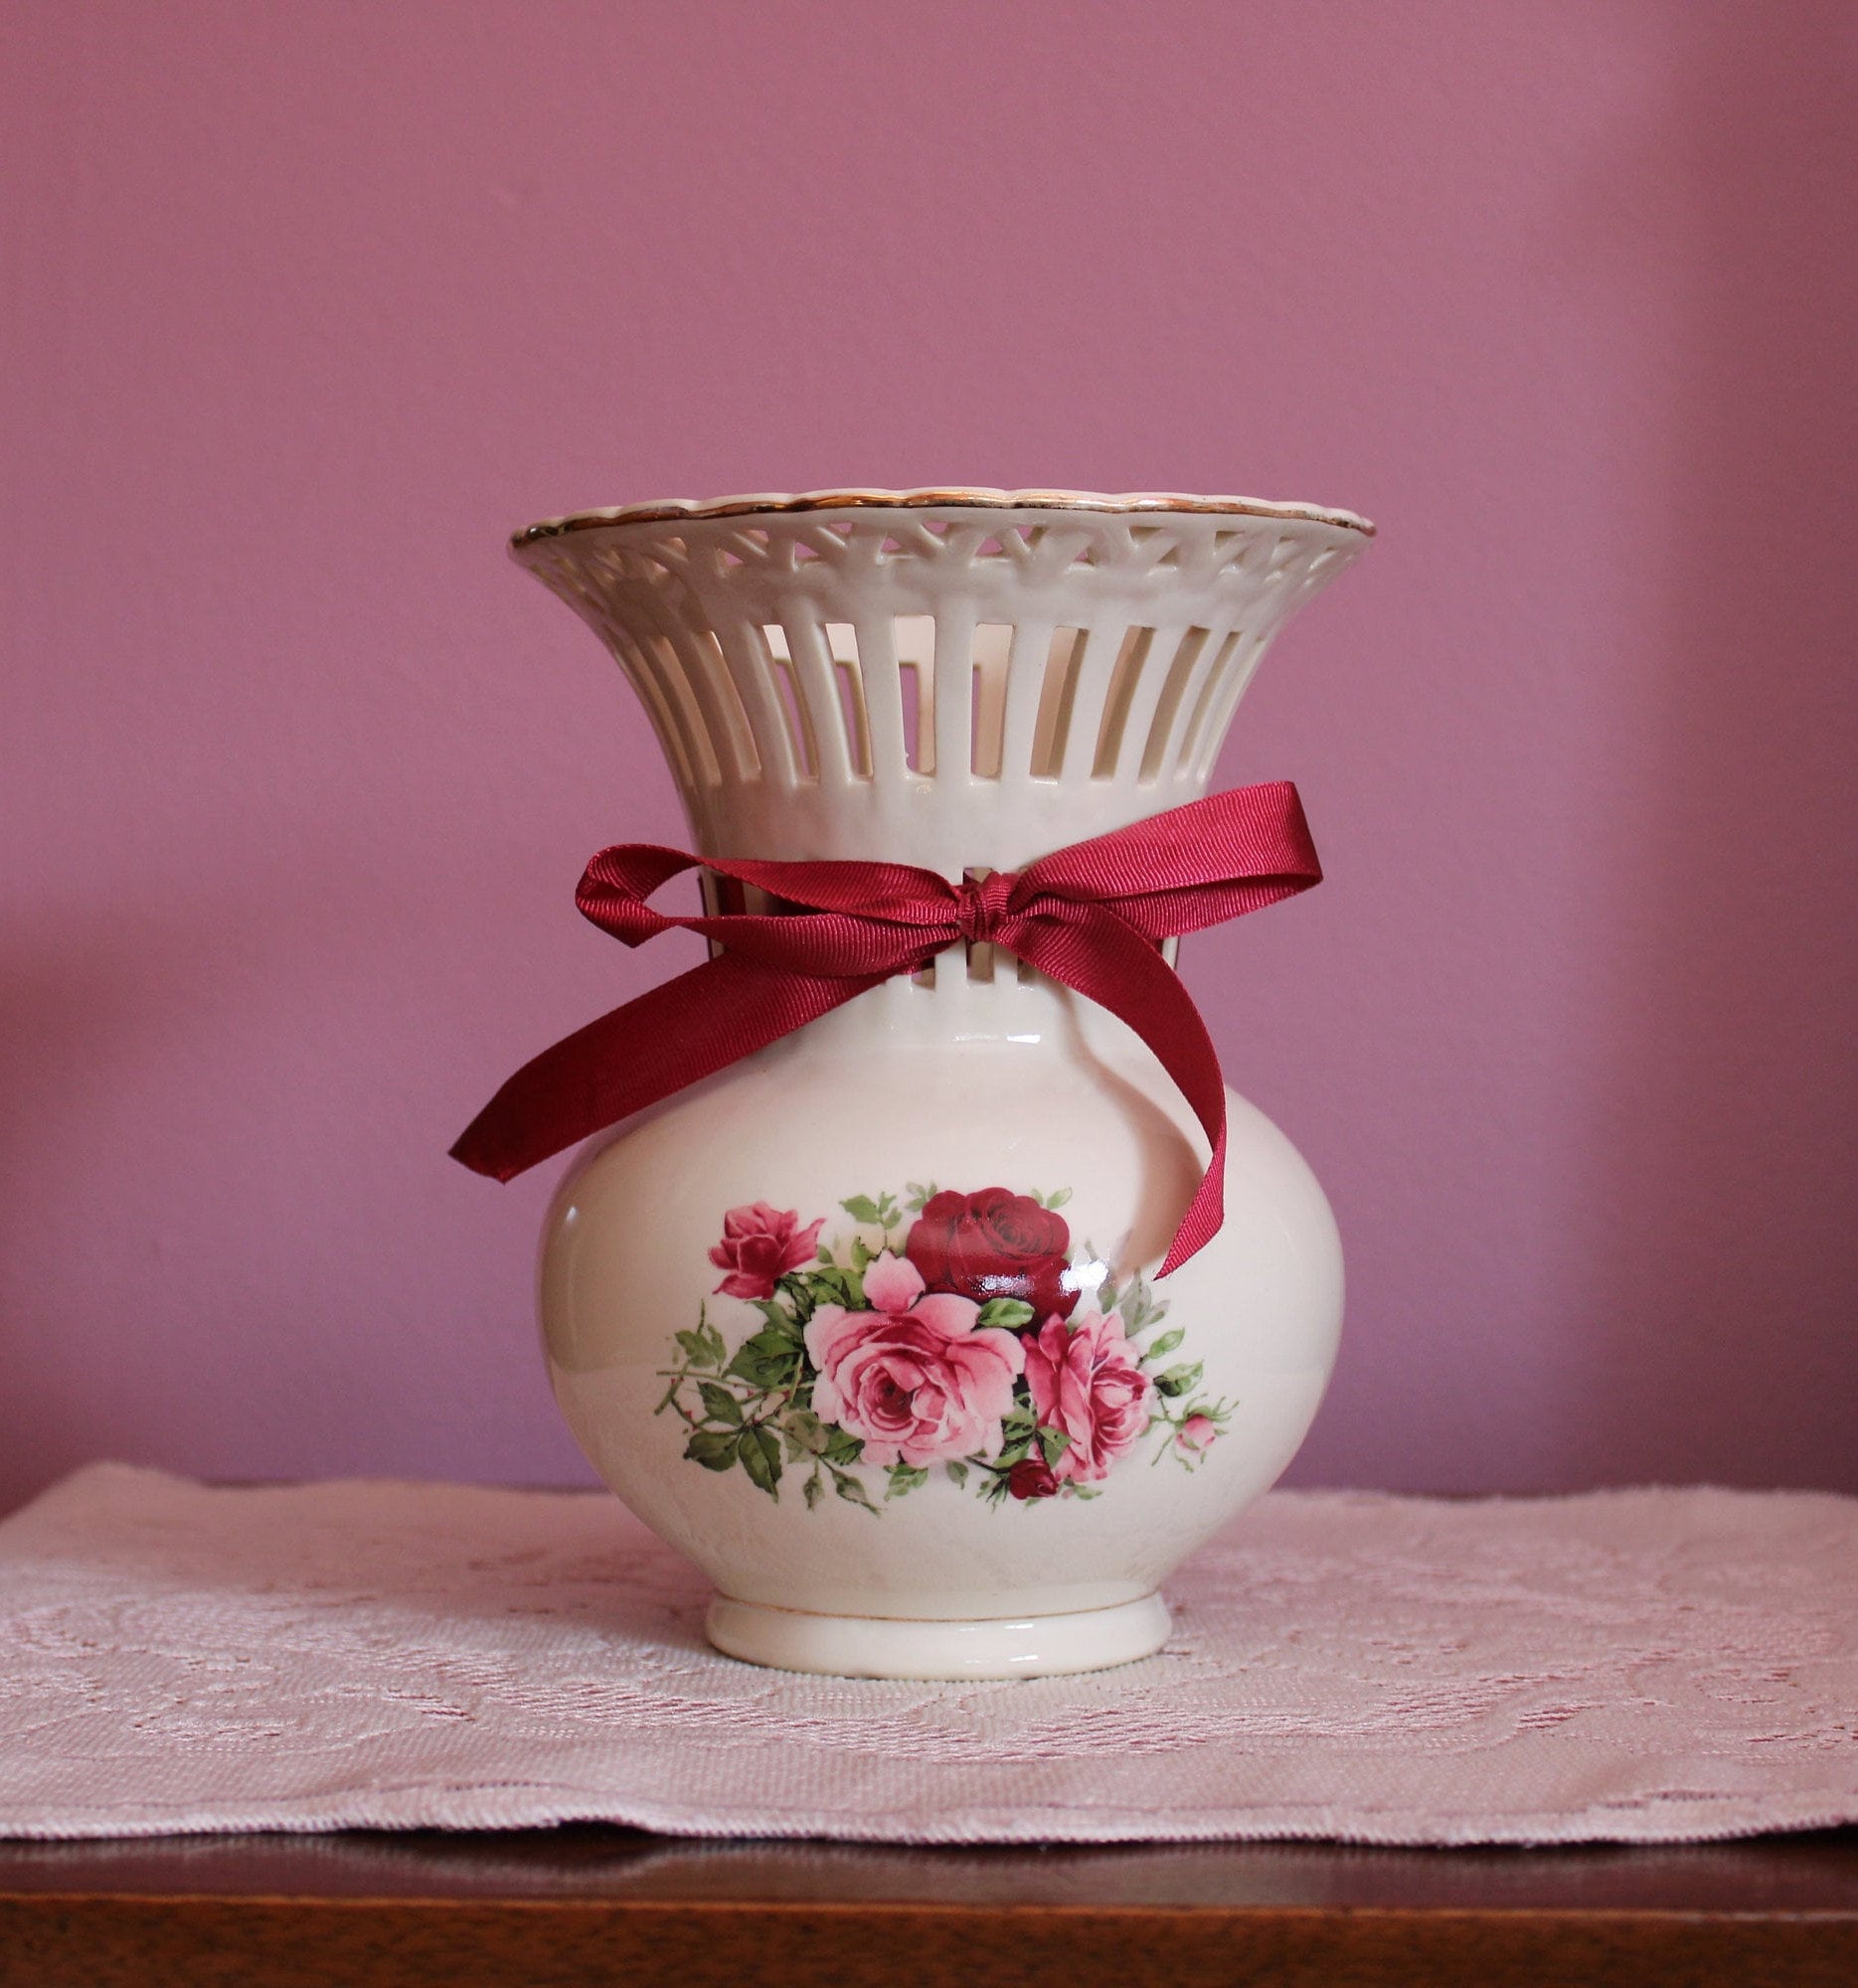 FALSK Bloom At blokere Formalities victorian Rose Vase by Baum Bros. - Etsy